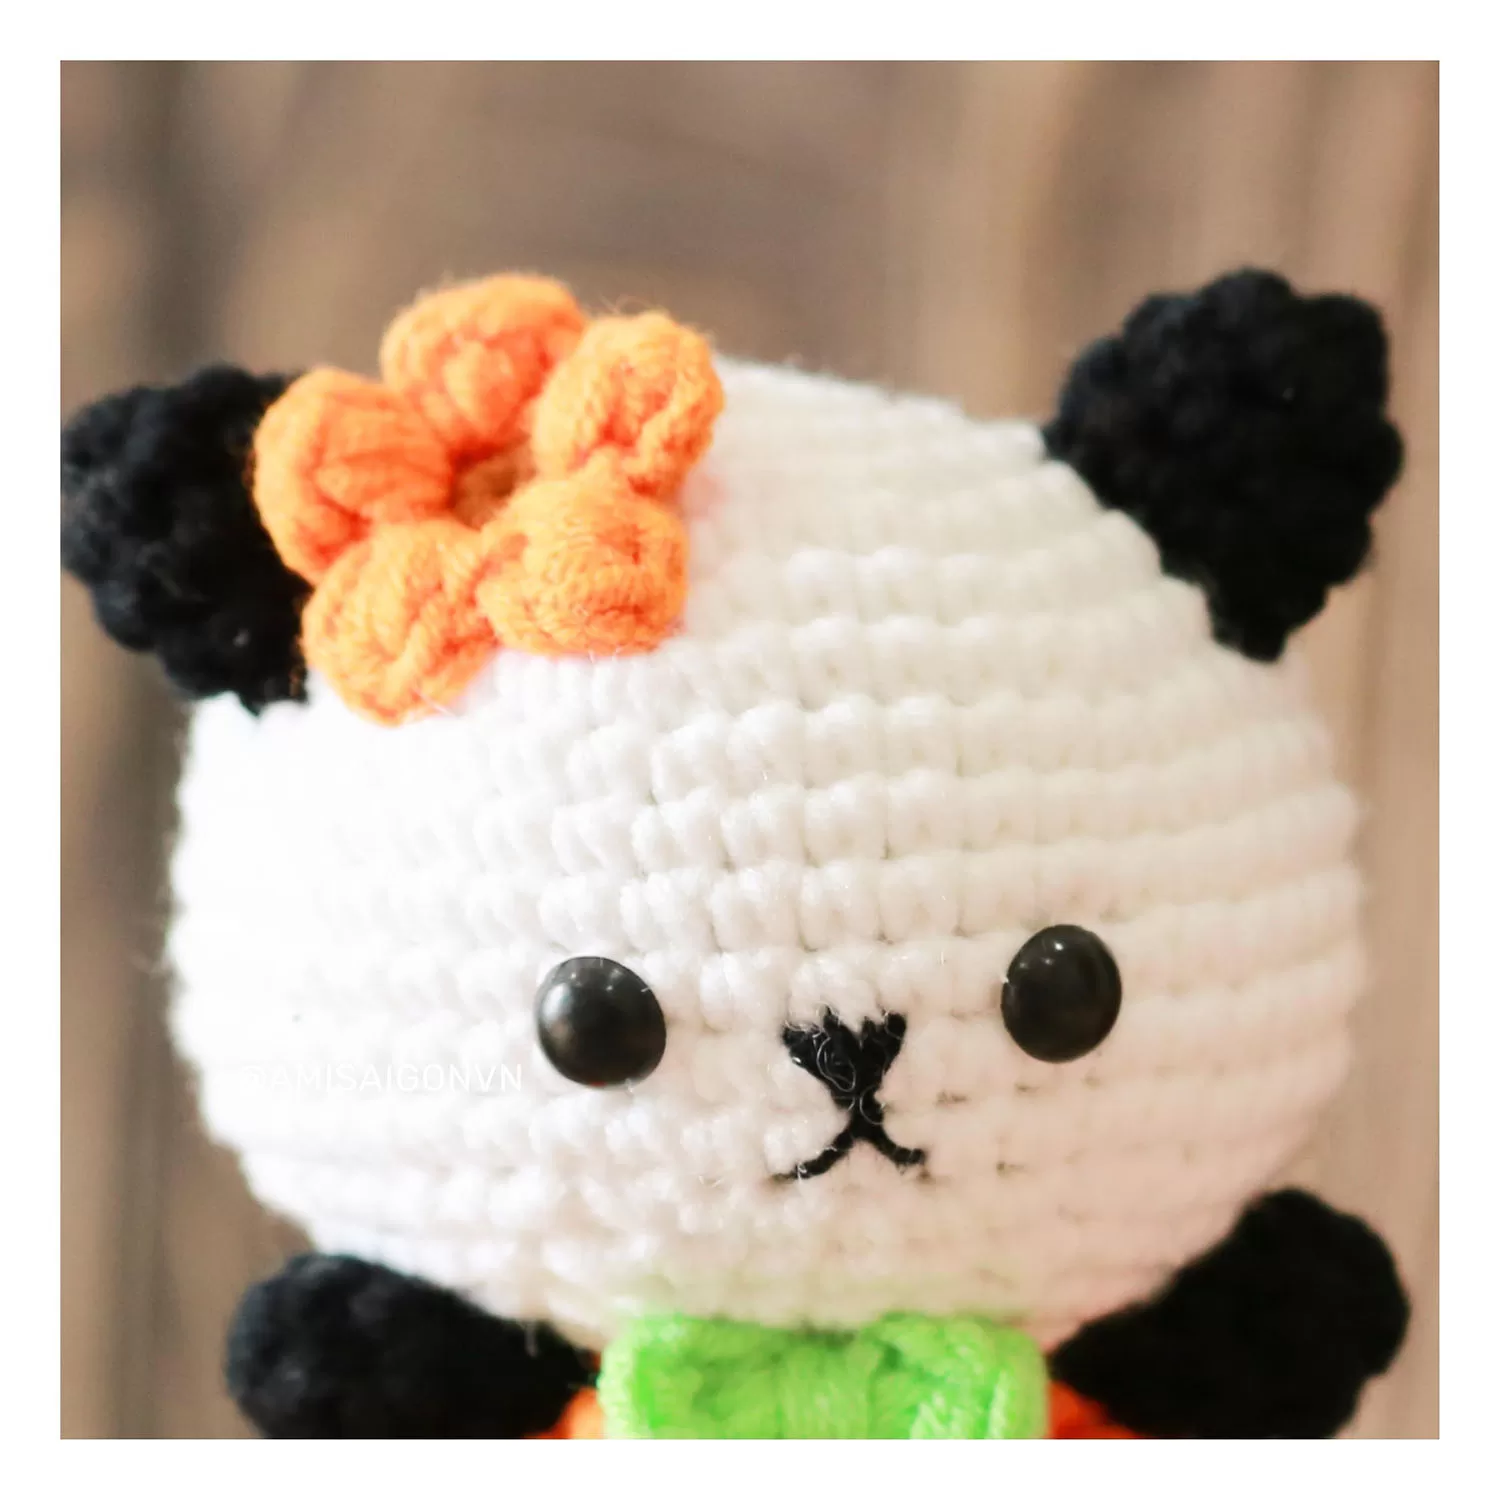 Panda in Pumpkin Outfit Amigurumi | Crochet Pattern | Amigurumi Tutorial PDF in English | AmiSaigon